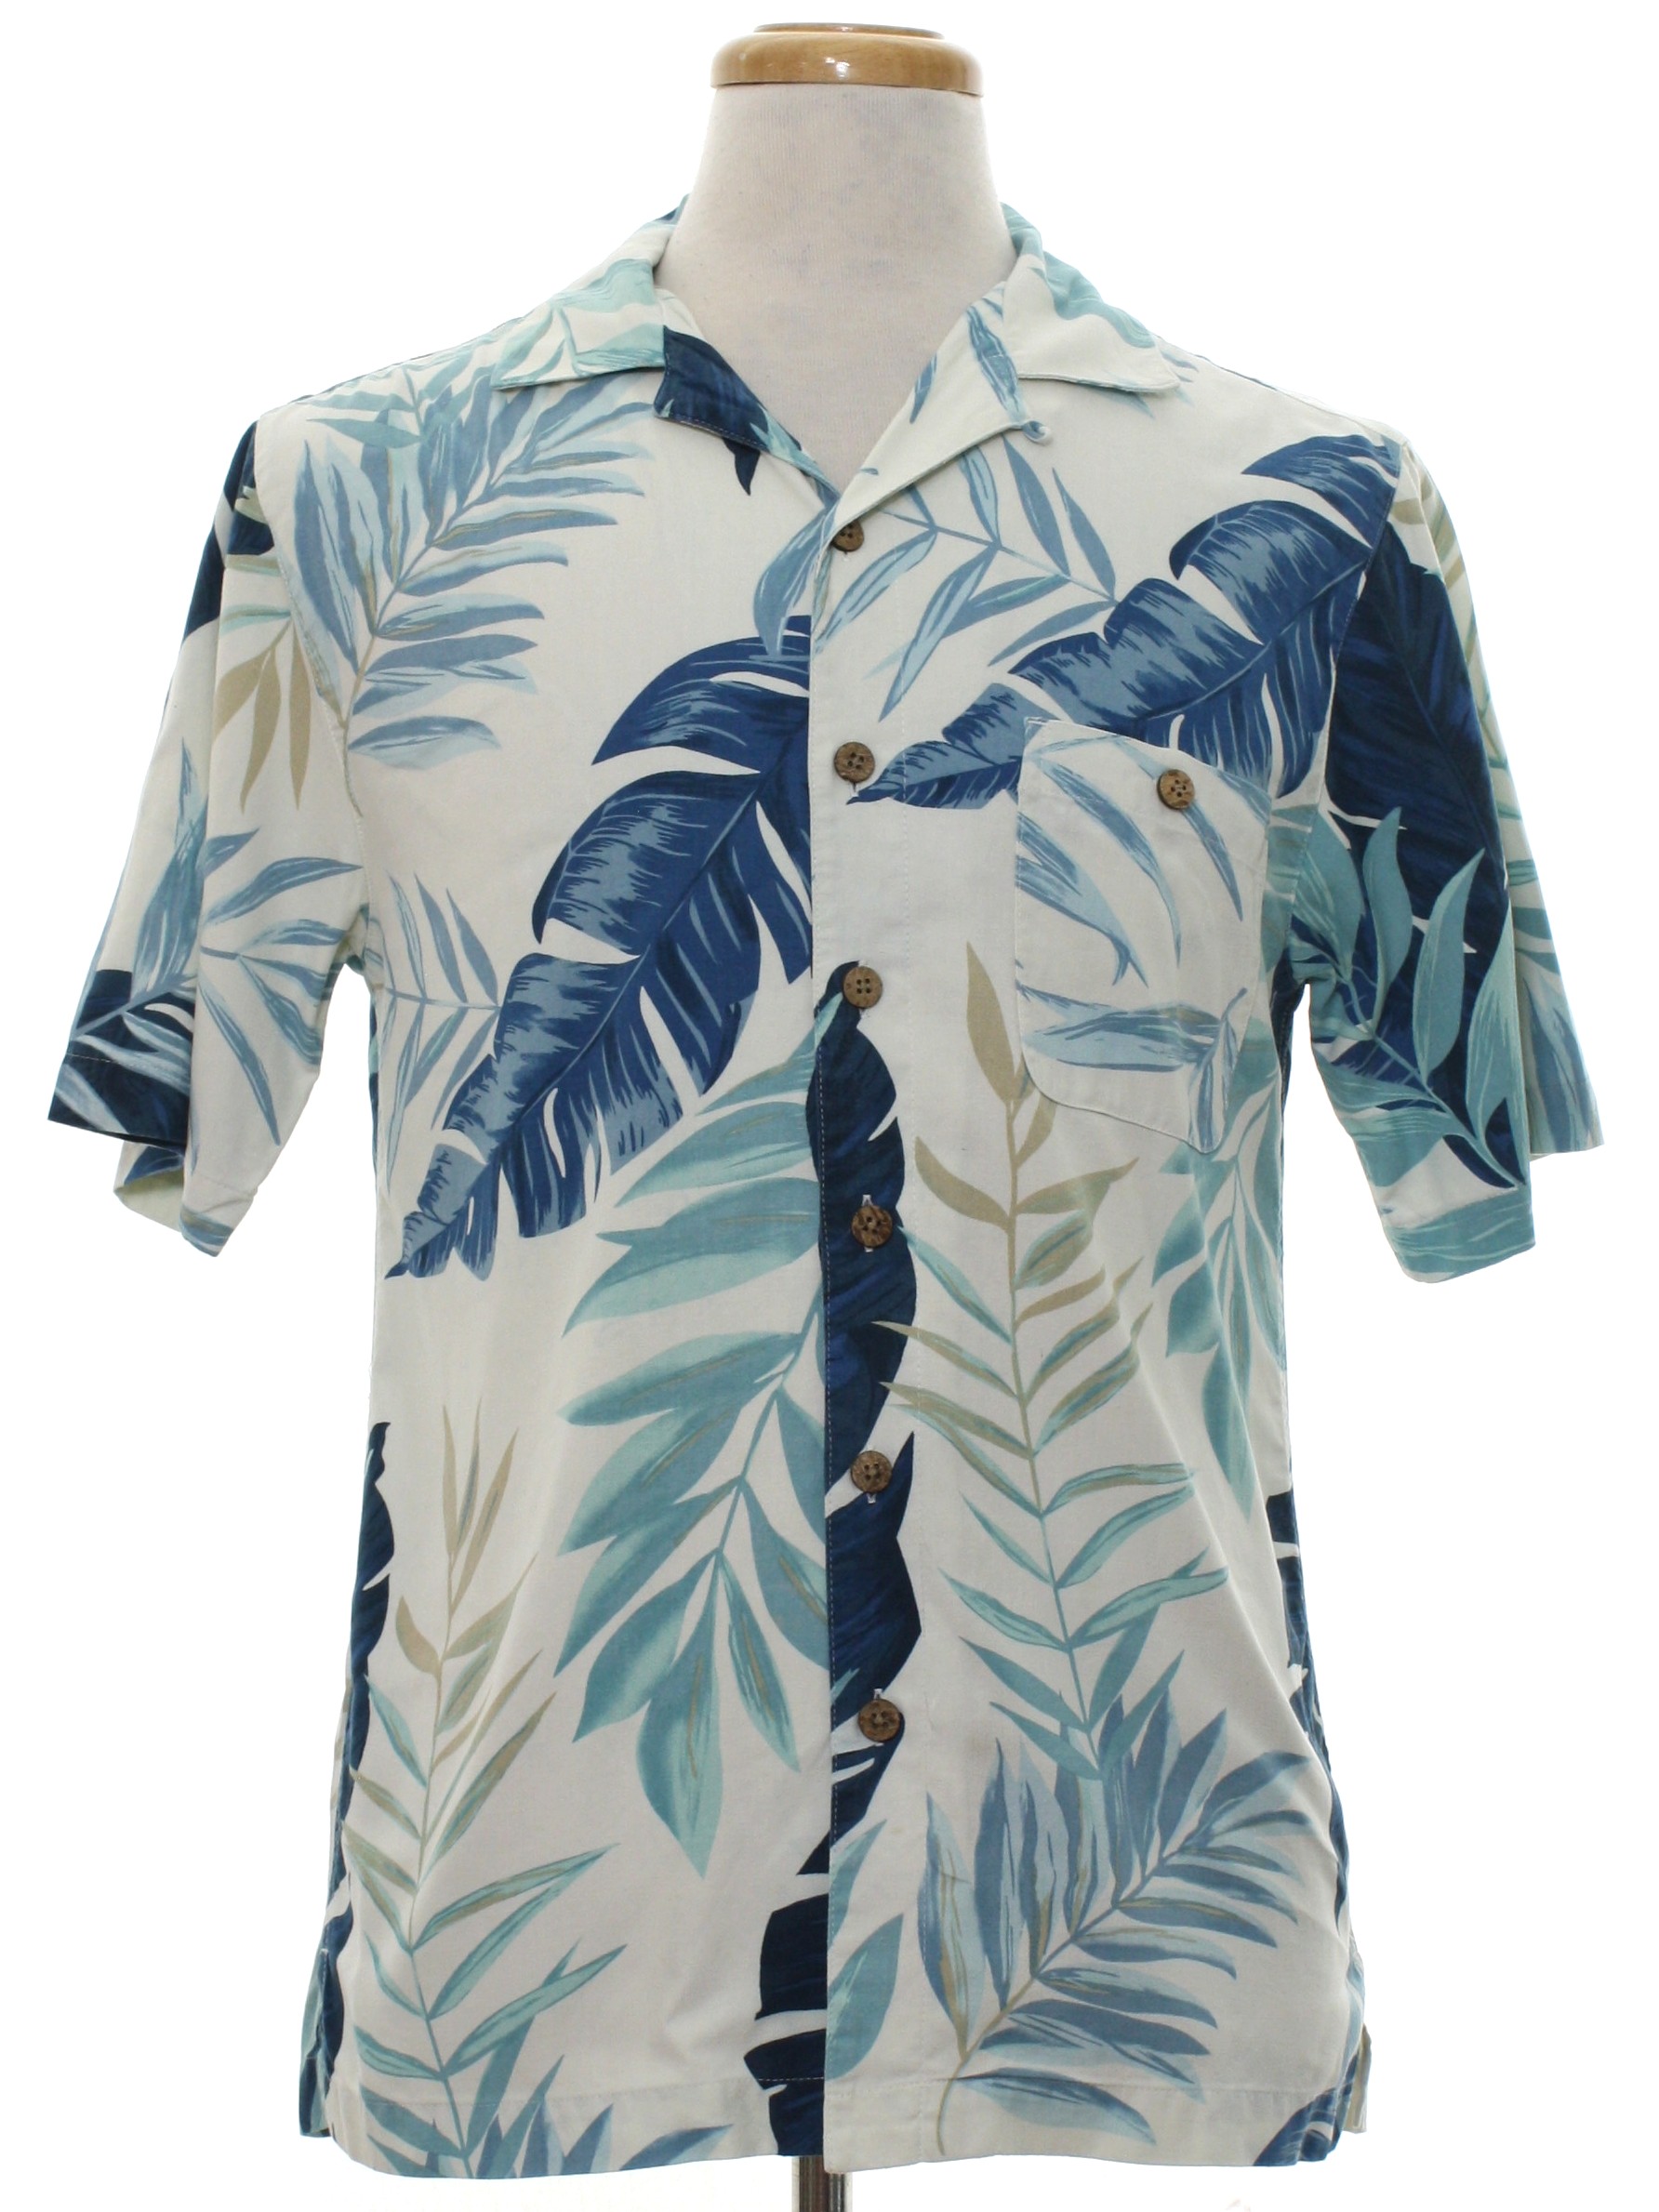 Vintage 90s Hawaiian Shirt: 90s -St Johns Bay- Mens white